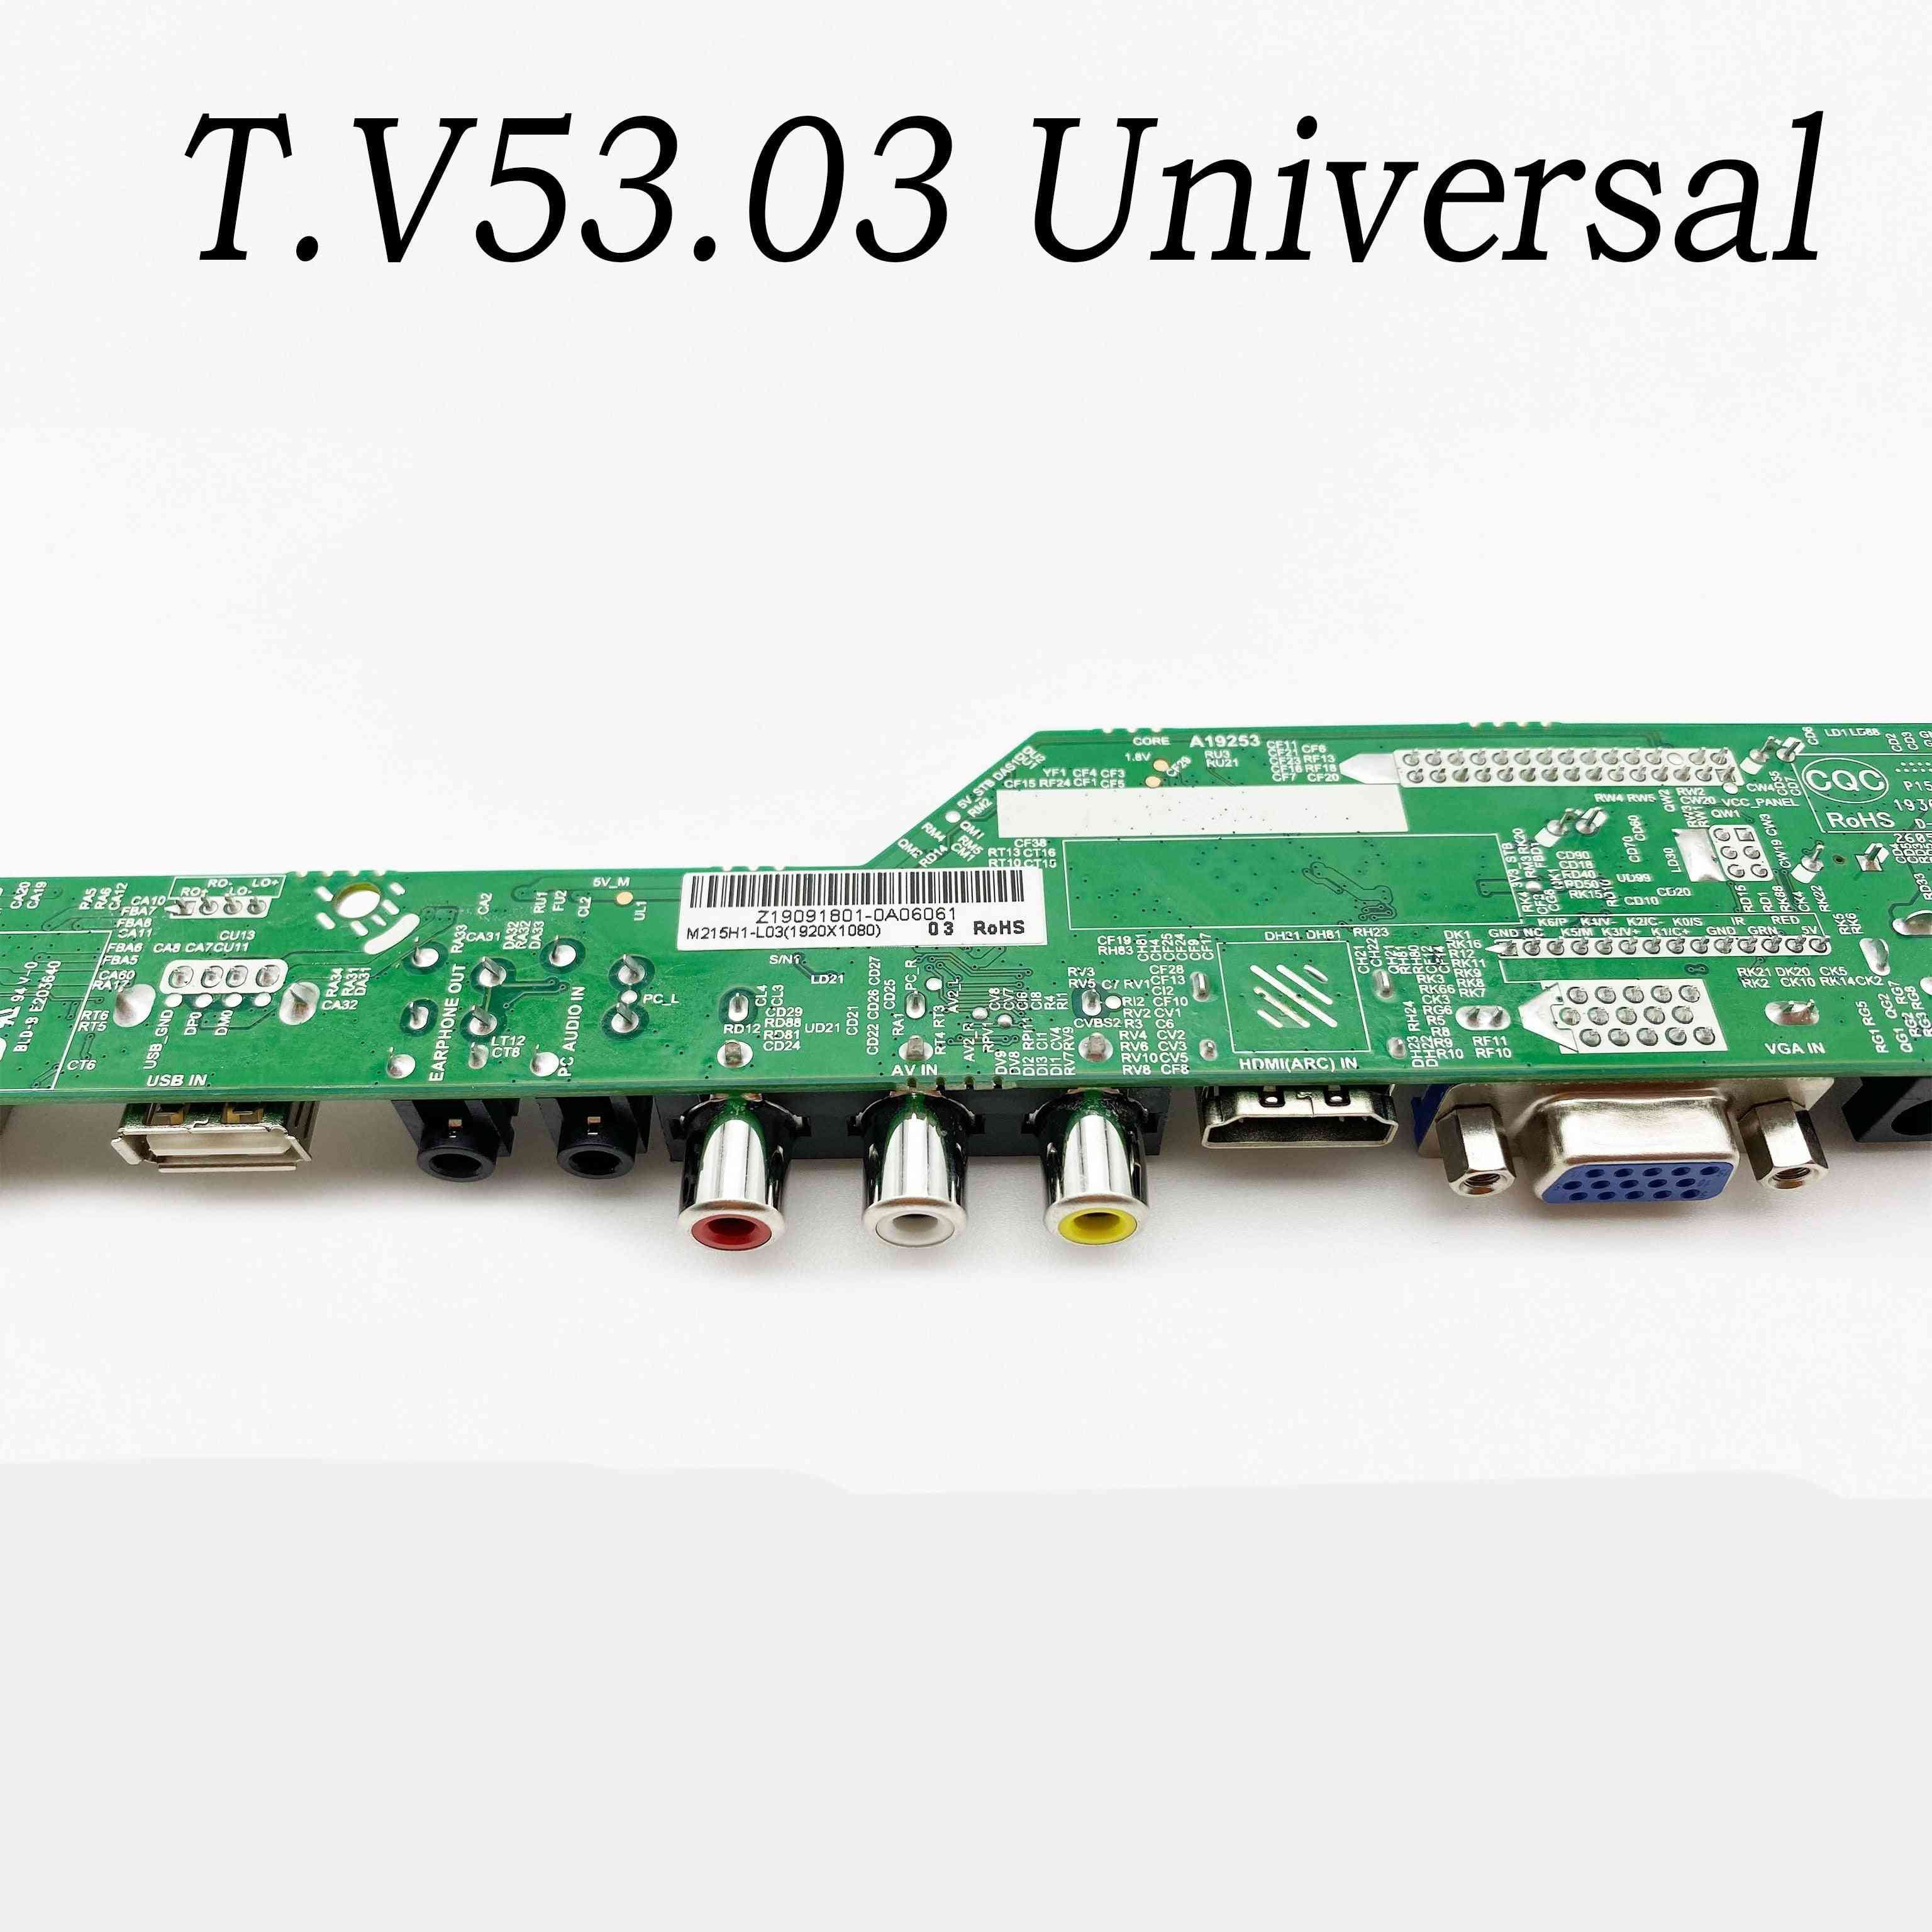 Univerzalna ploča upravljačkog programa za LCD televizor, pc / vga / hdmi / usb sučelje + 7 tipkovnica + 2 pretvarača žarulje